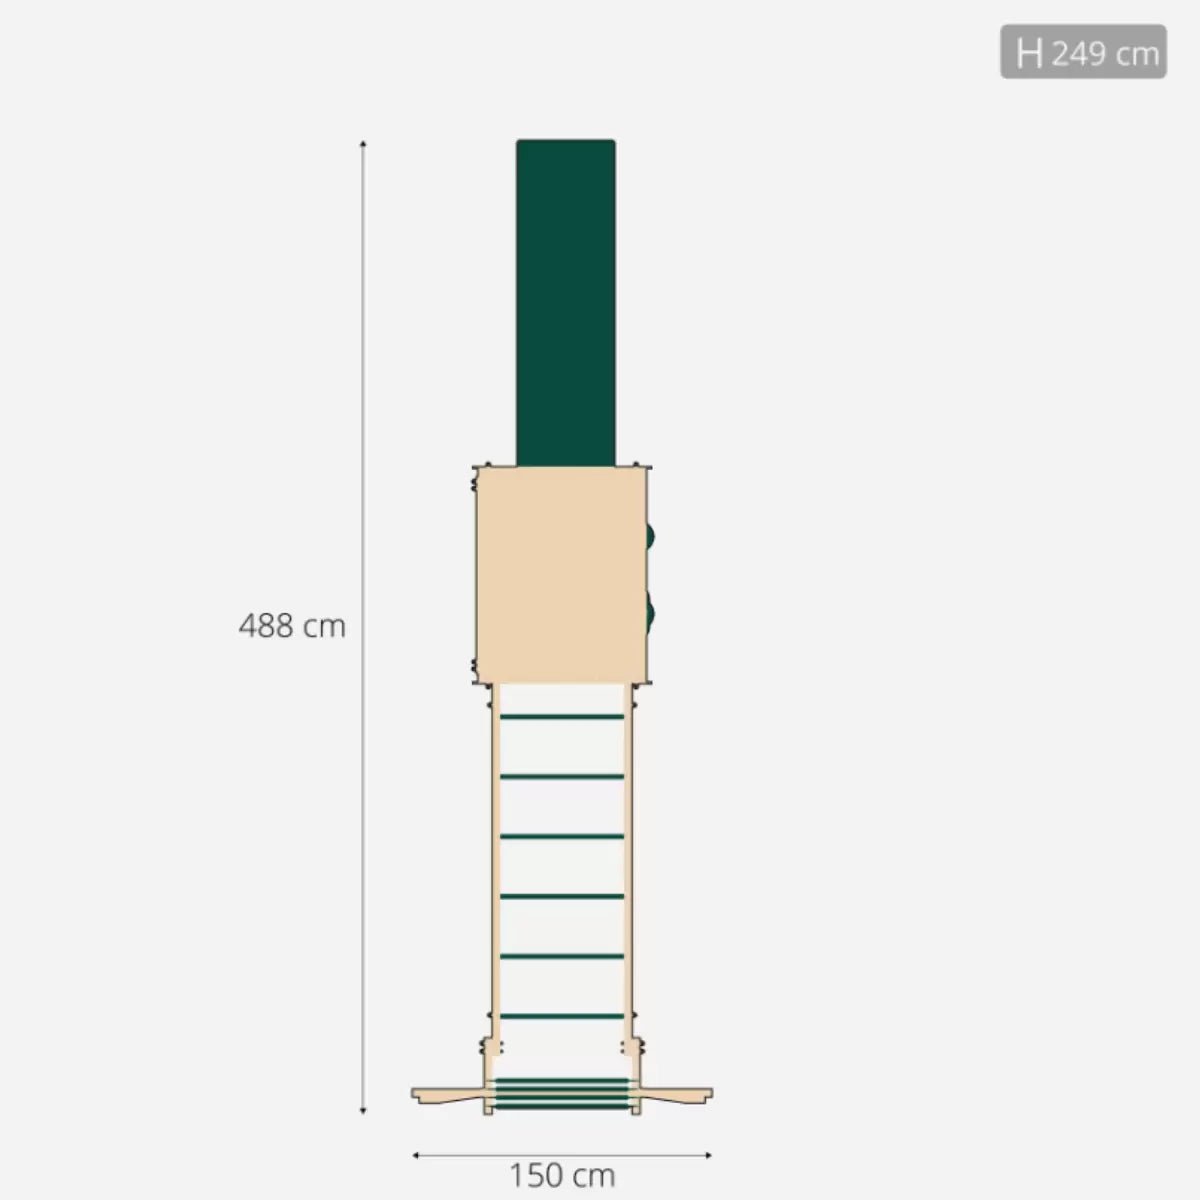 Measurements Plum Lookout Tower with Swings, Slide & Monkey Bars